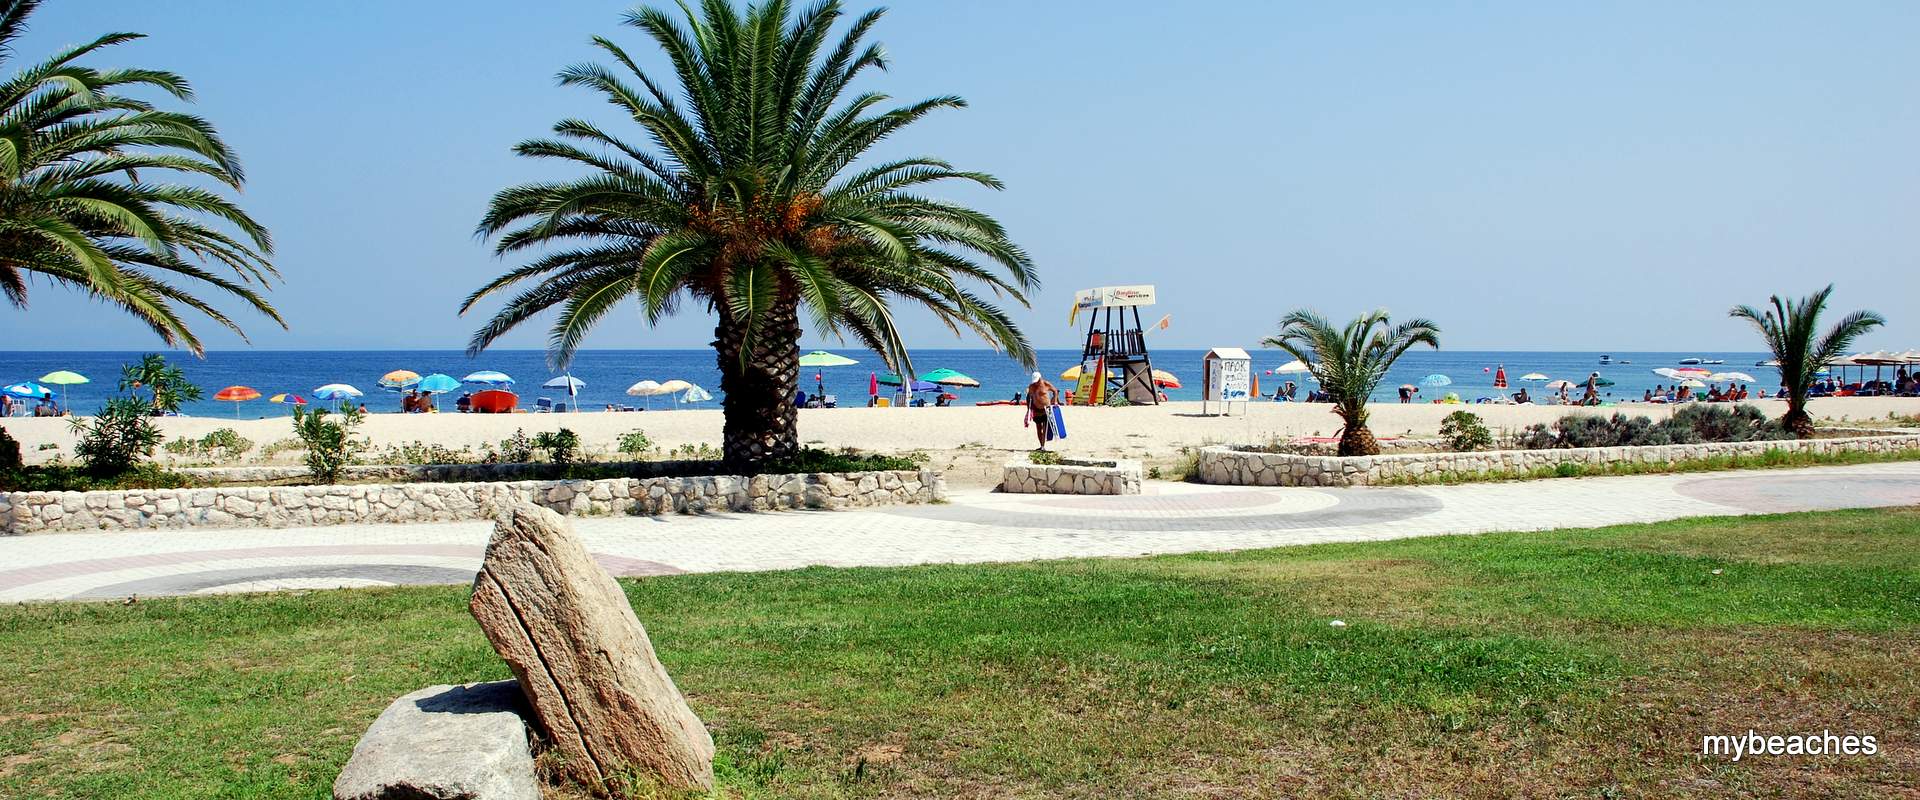 East Potidea beach, Kassandra, Halkidiki, Greece